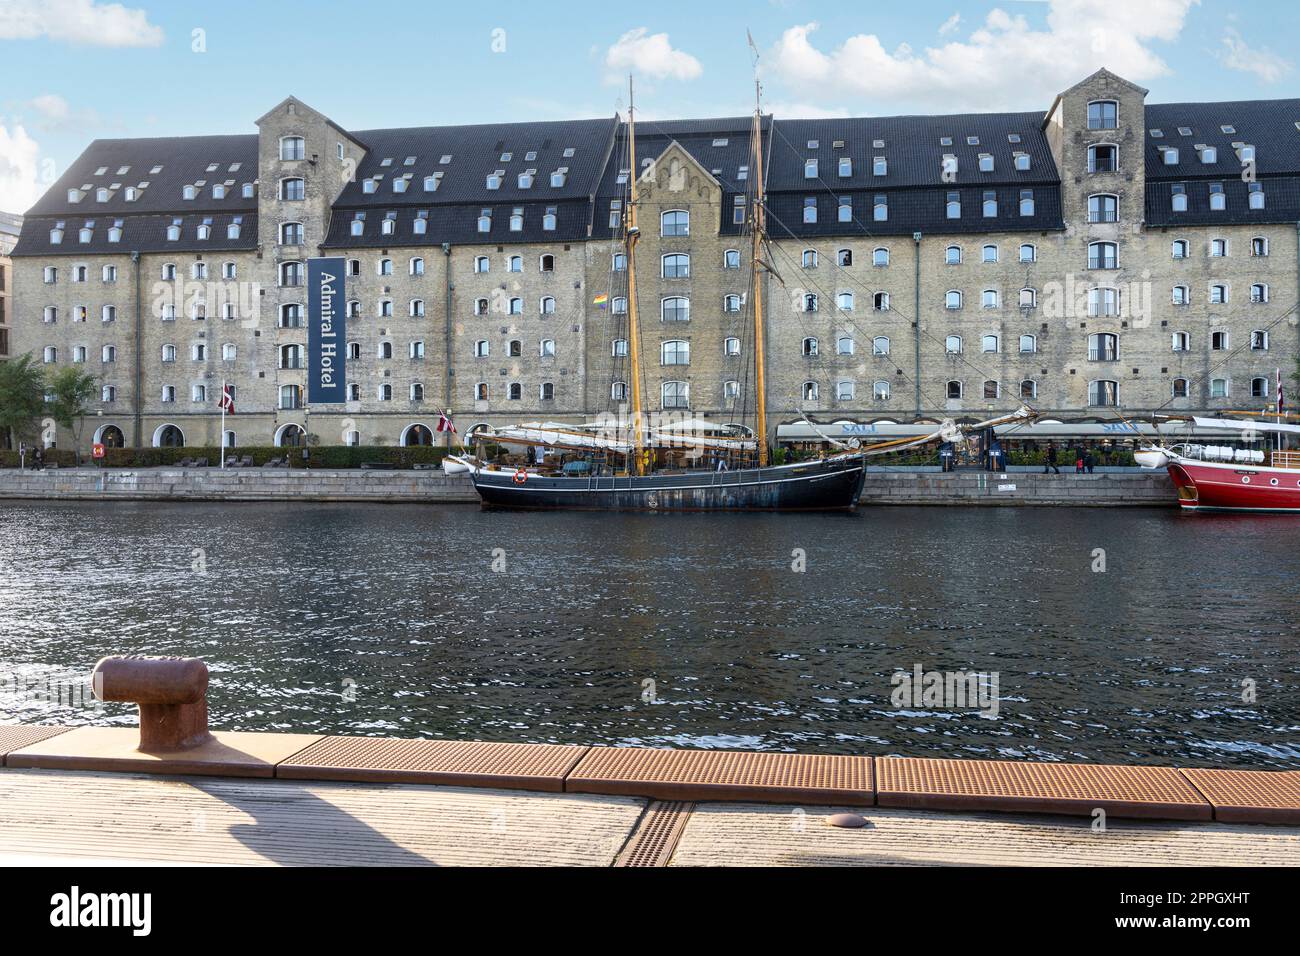 Admiral hotel palace in Copenhagen, Denmark Stock Photo